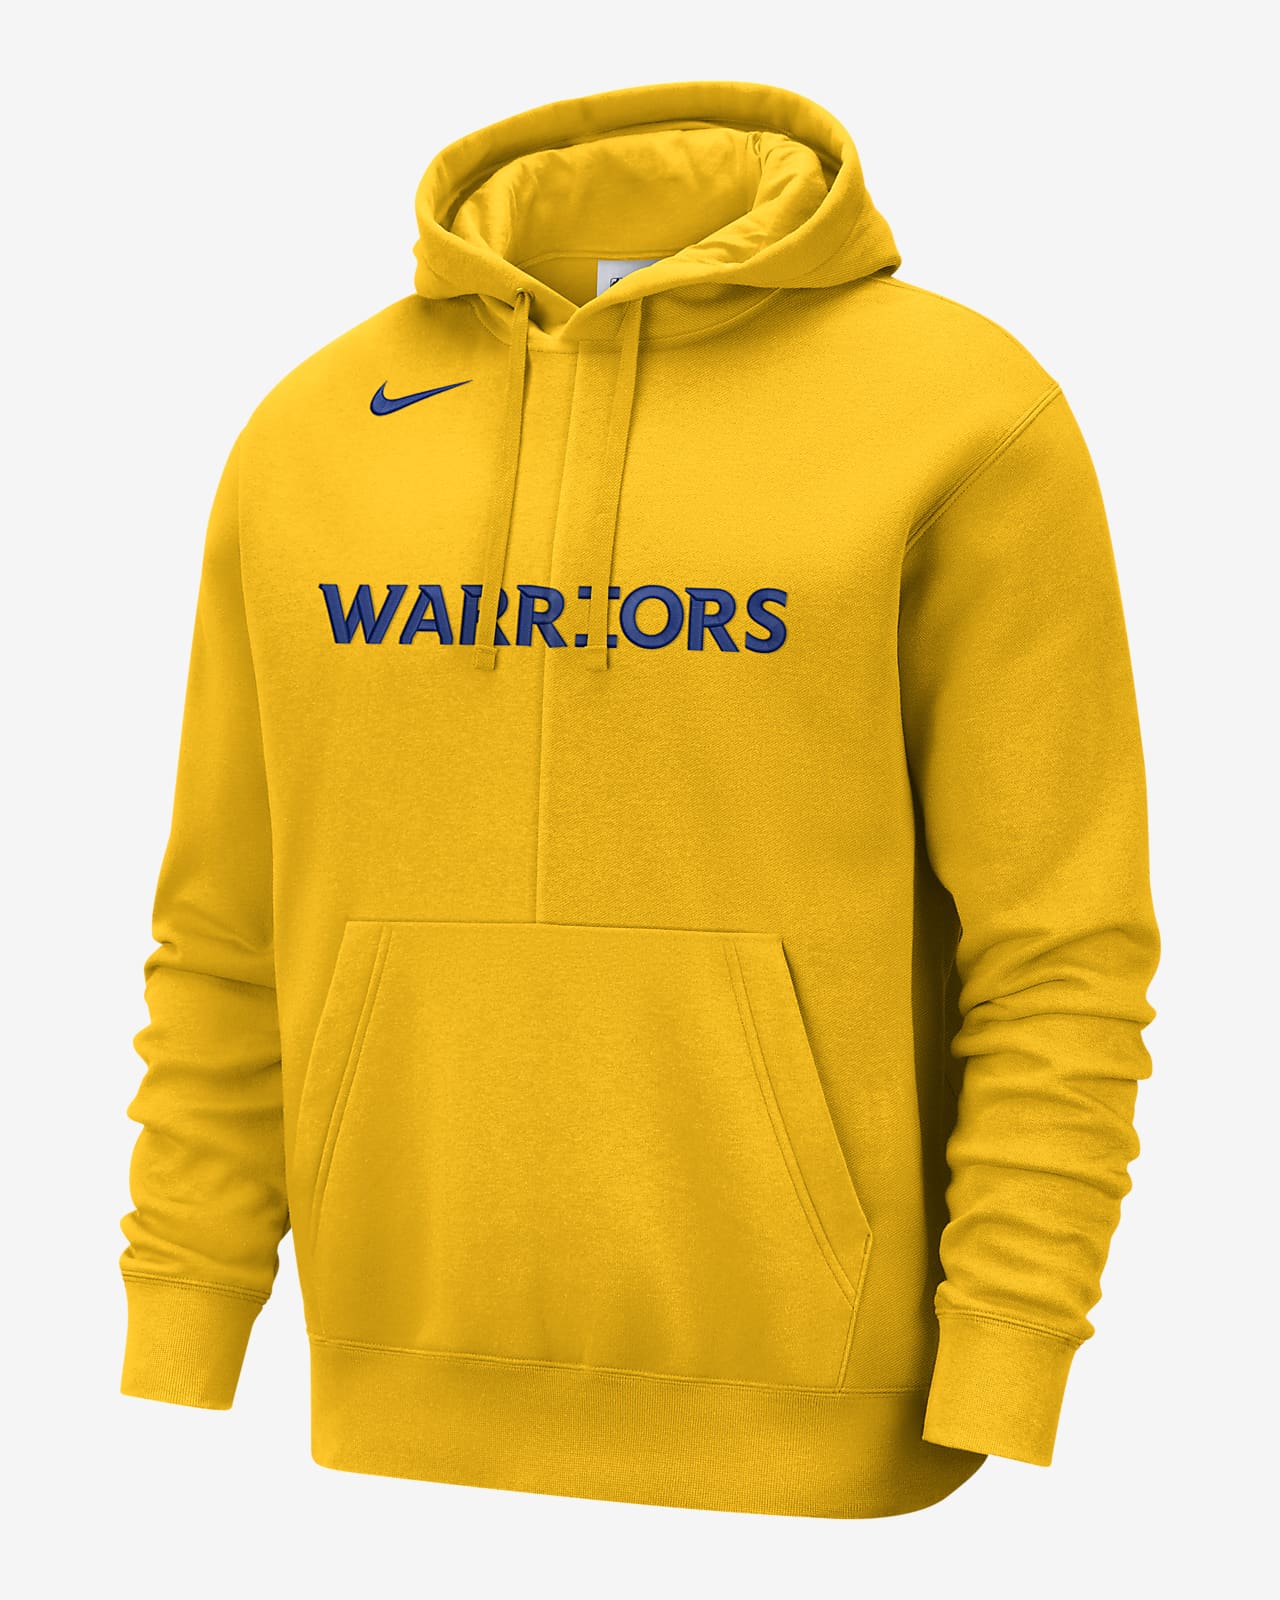 nba warriors sweatshirt